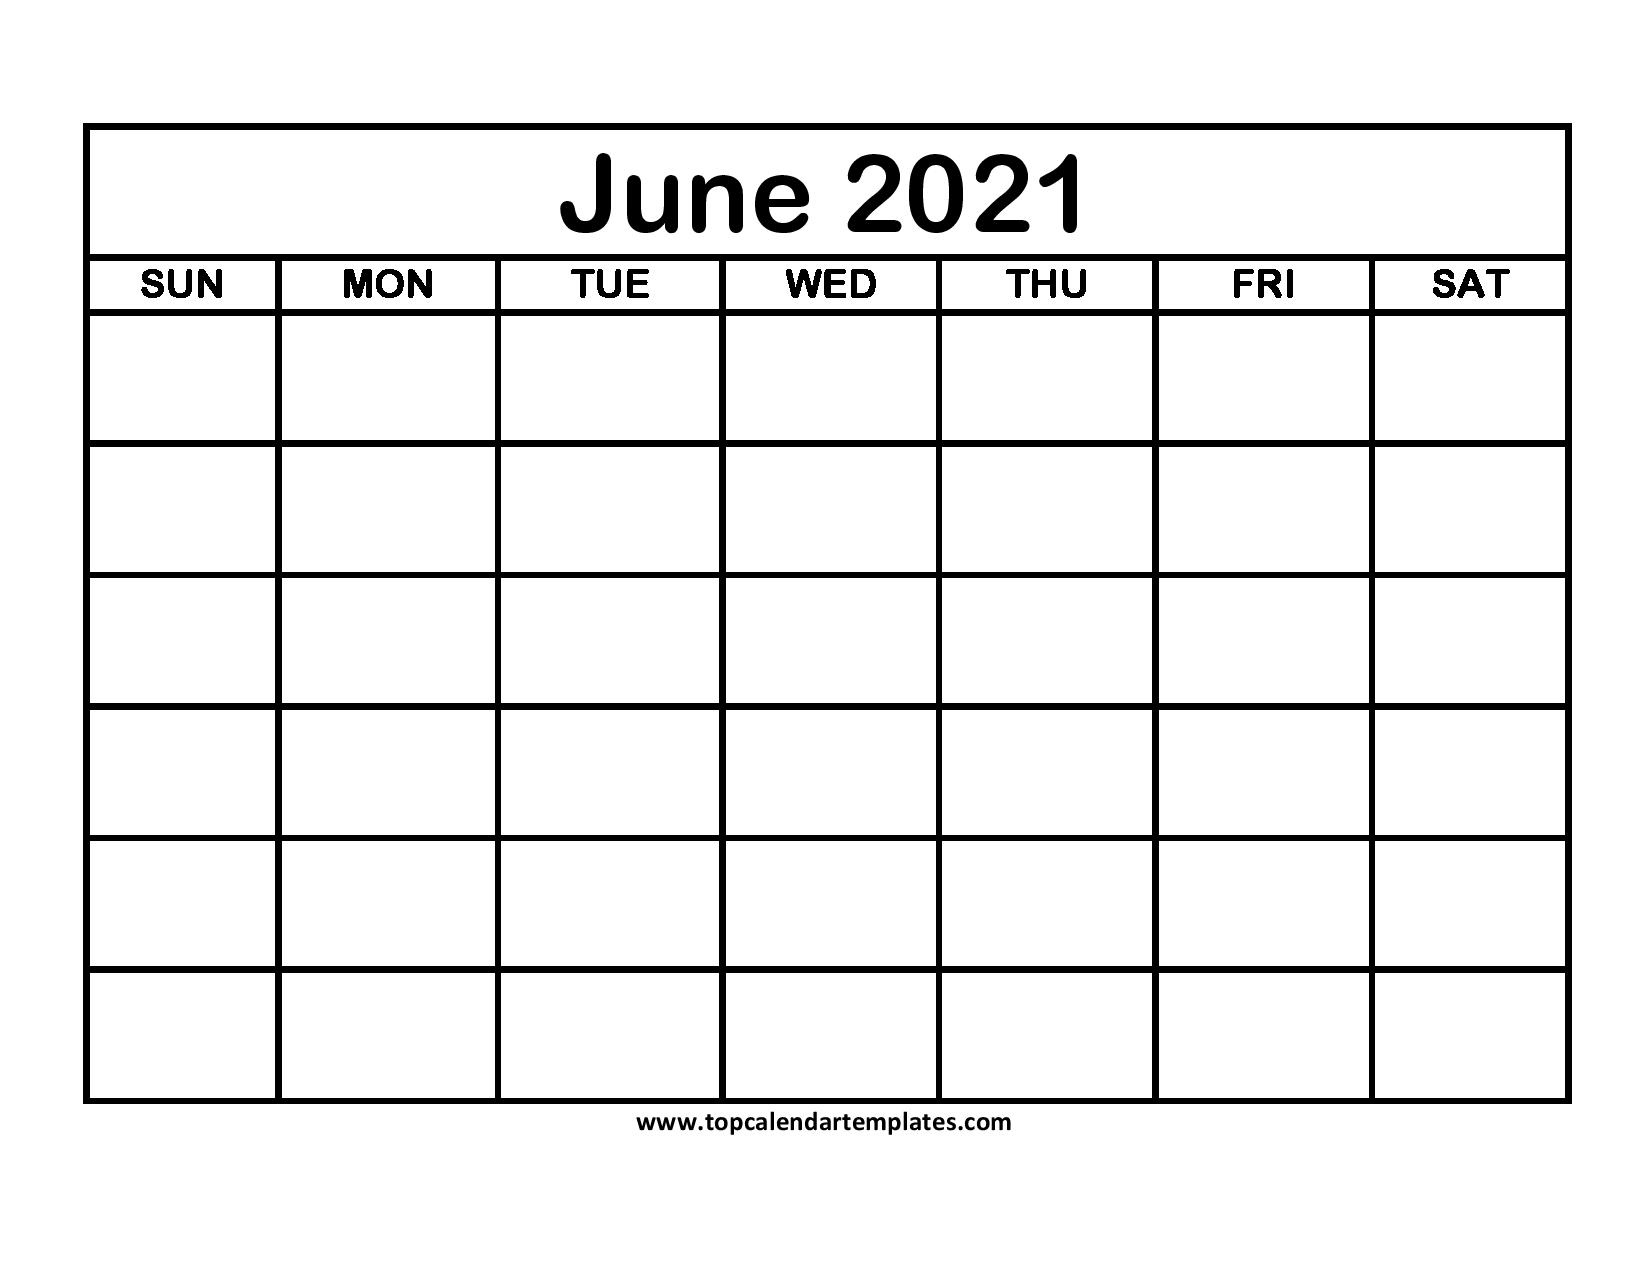 June 2021 Printable Calendar - Monthly Templates June 2021 Calendar Doc